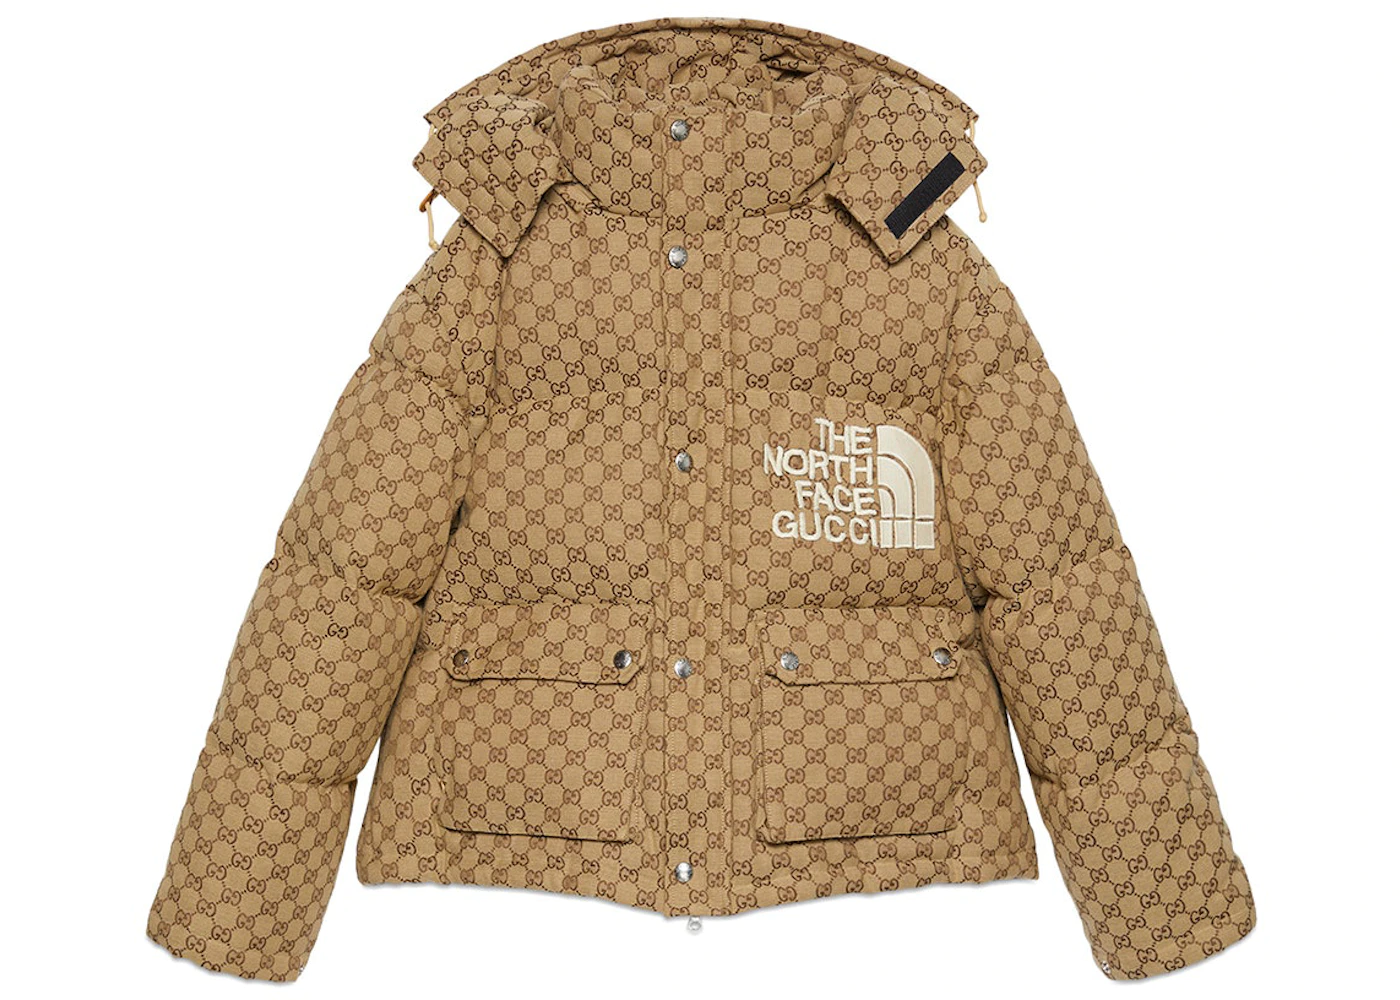 Oscuro explotar Generosidad Gucci x The North Face Print Jacket Beige/Ebony - SS21 Men's - US